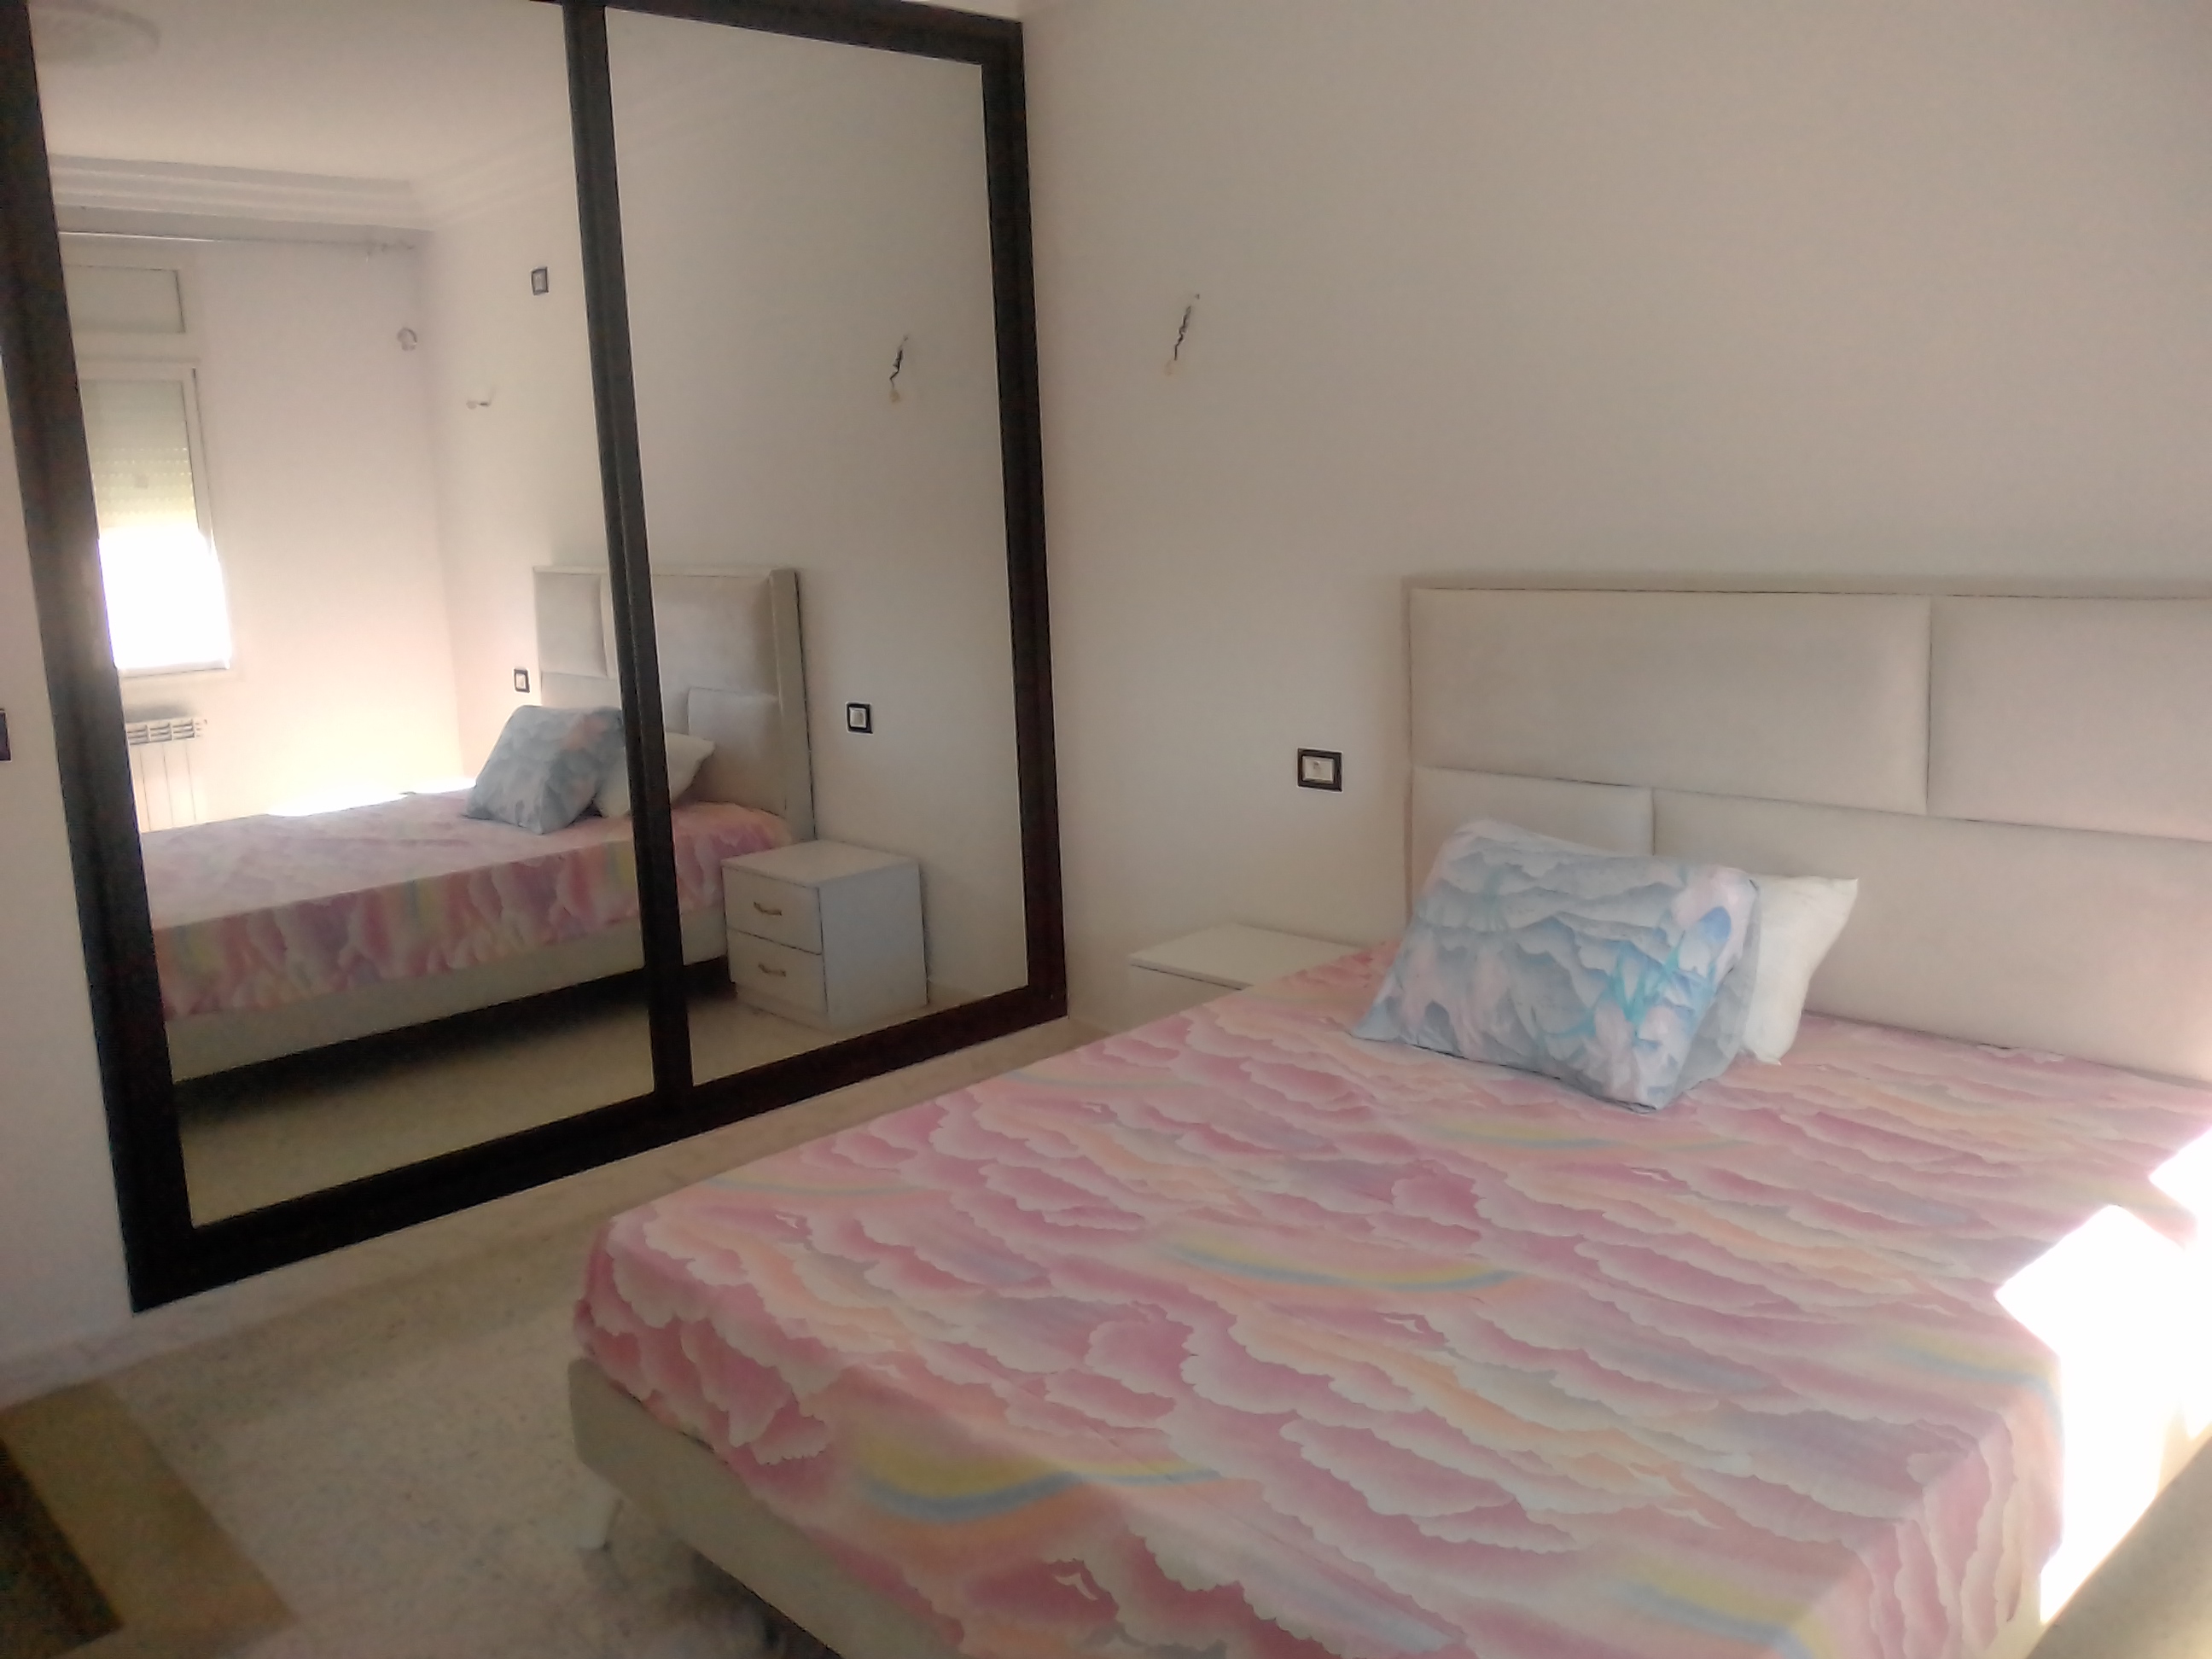 Hammam Chatt Borj Cedria Vente Appart. 4 pices Luxueux  appartement meubler